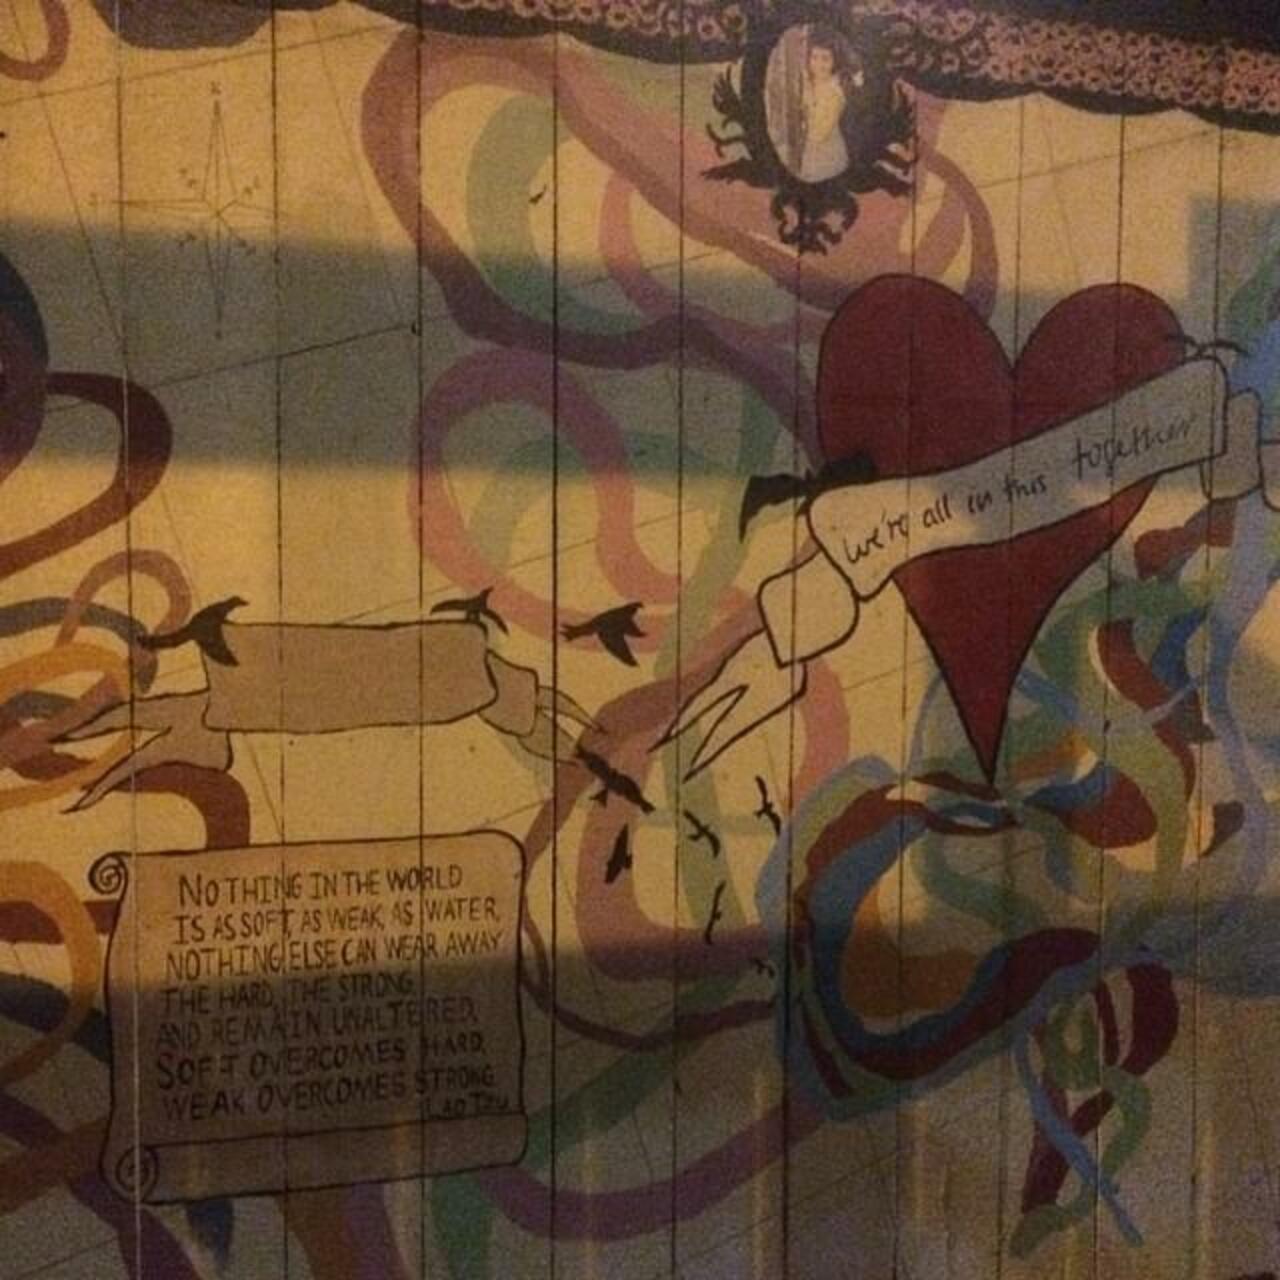 #Mural #Graffiti #WallArt #Art #MissionStreet #SanFrancisco http://t.co/R0YUdfRMTk